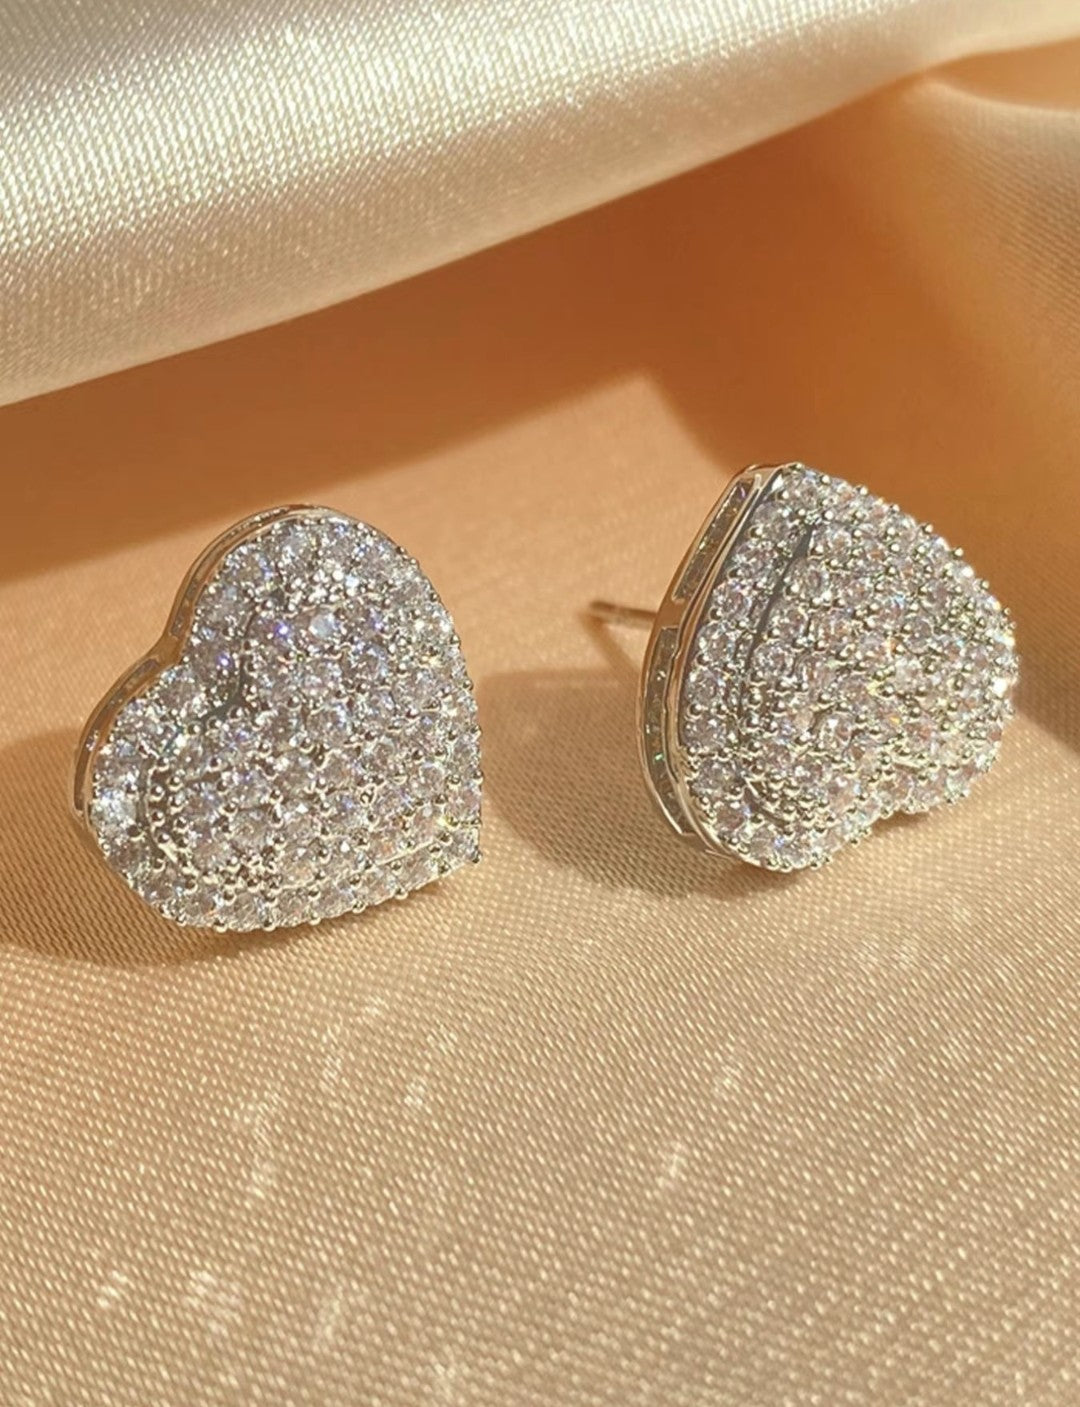 Elegant Heart Shaped stud earrings